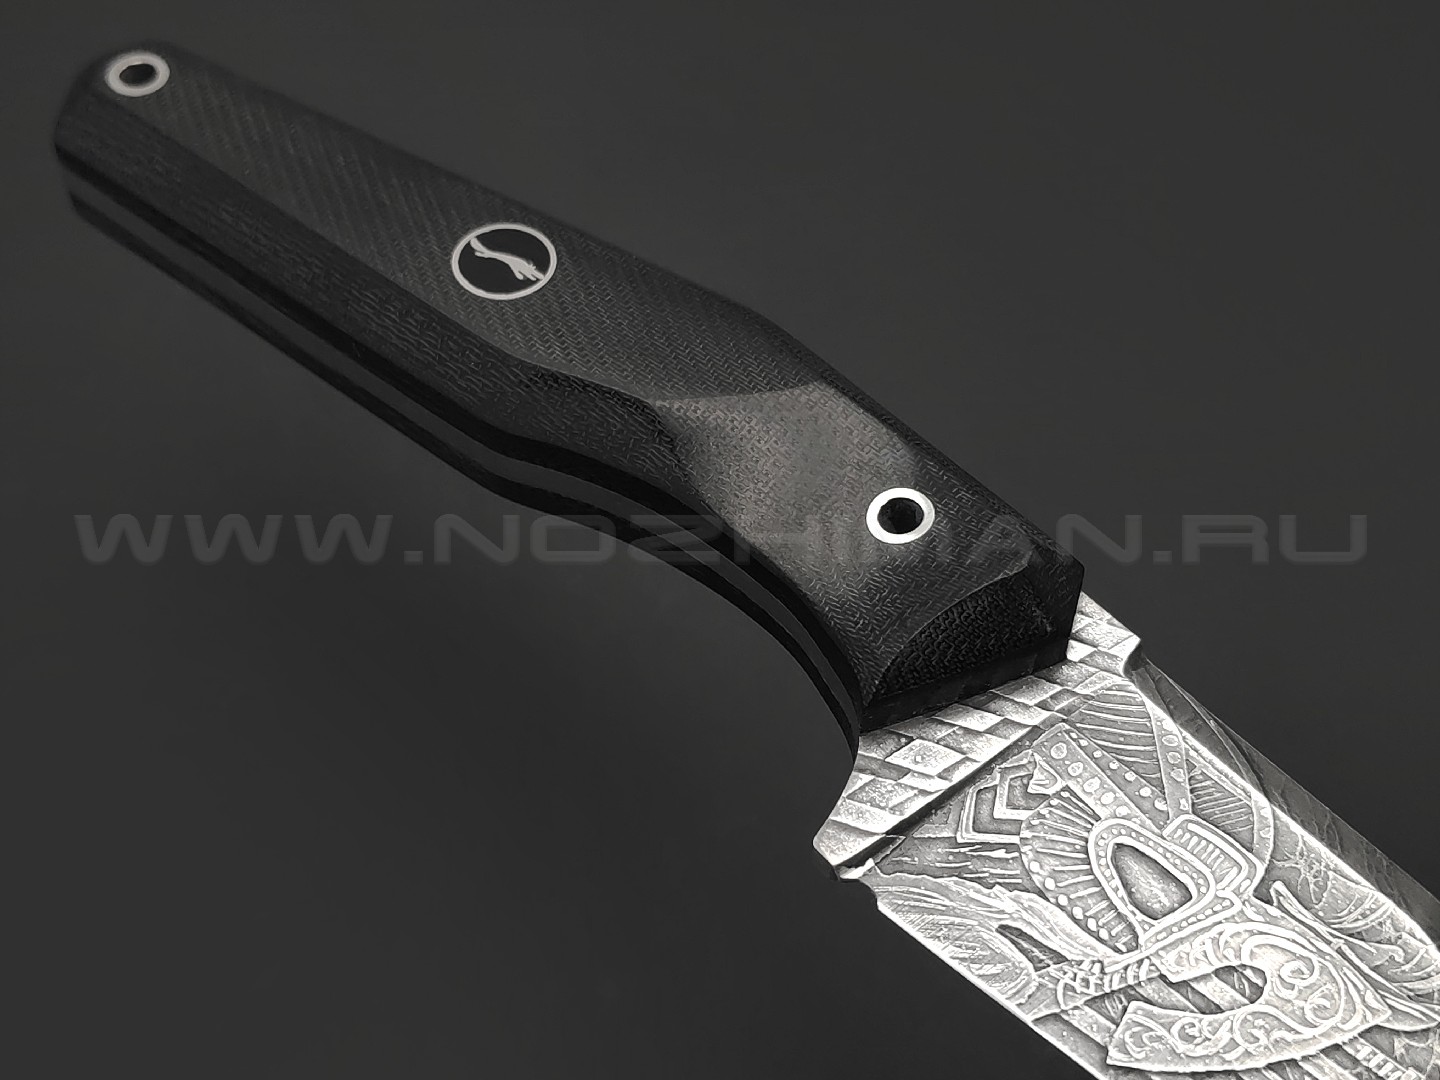 Волчий Век нож Wharn Viking Edition сталь N690 WA худ.травление, рукоять Микарта